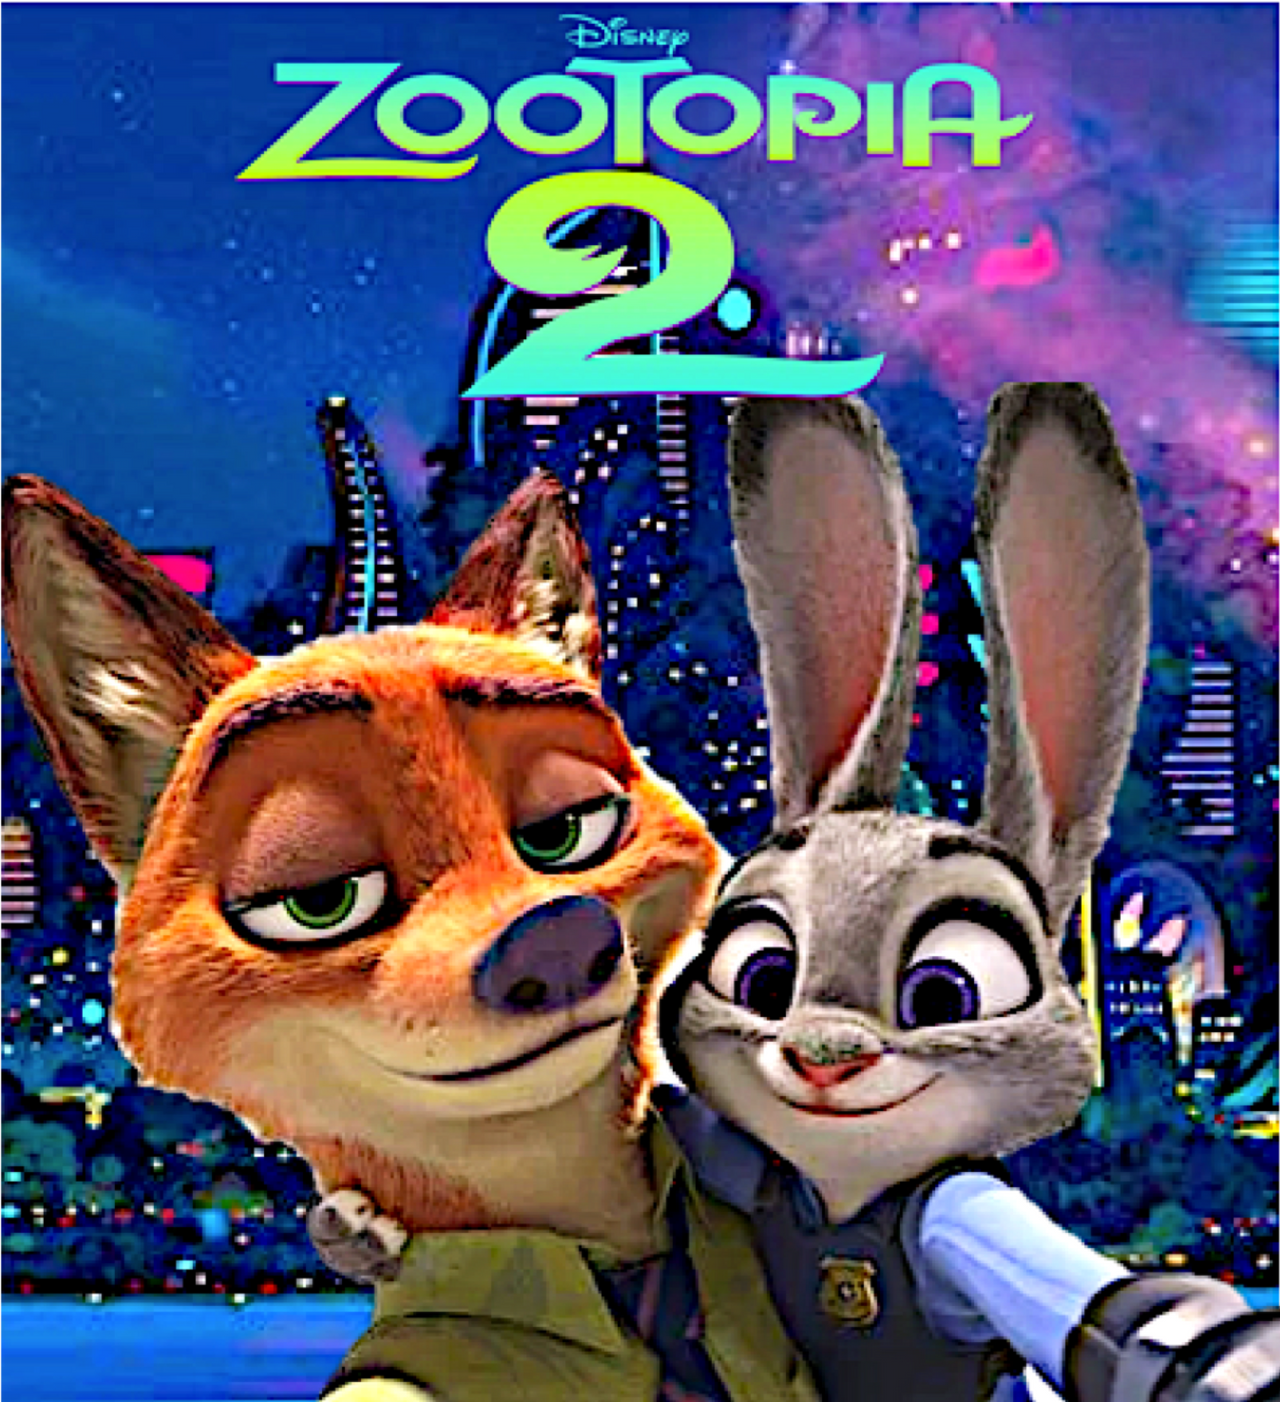 Zootopia 2 (2024) Teaser Trailer